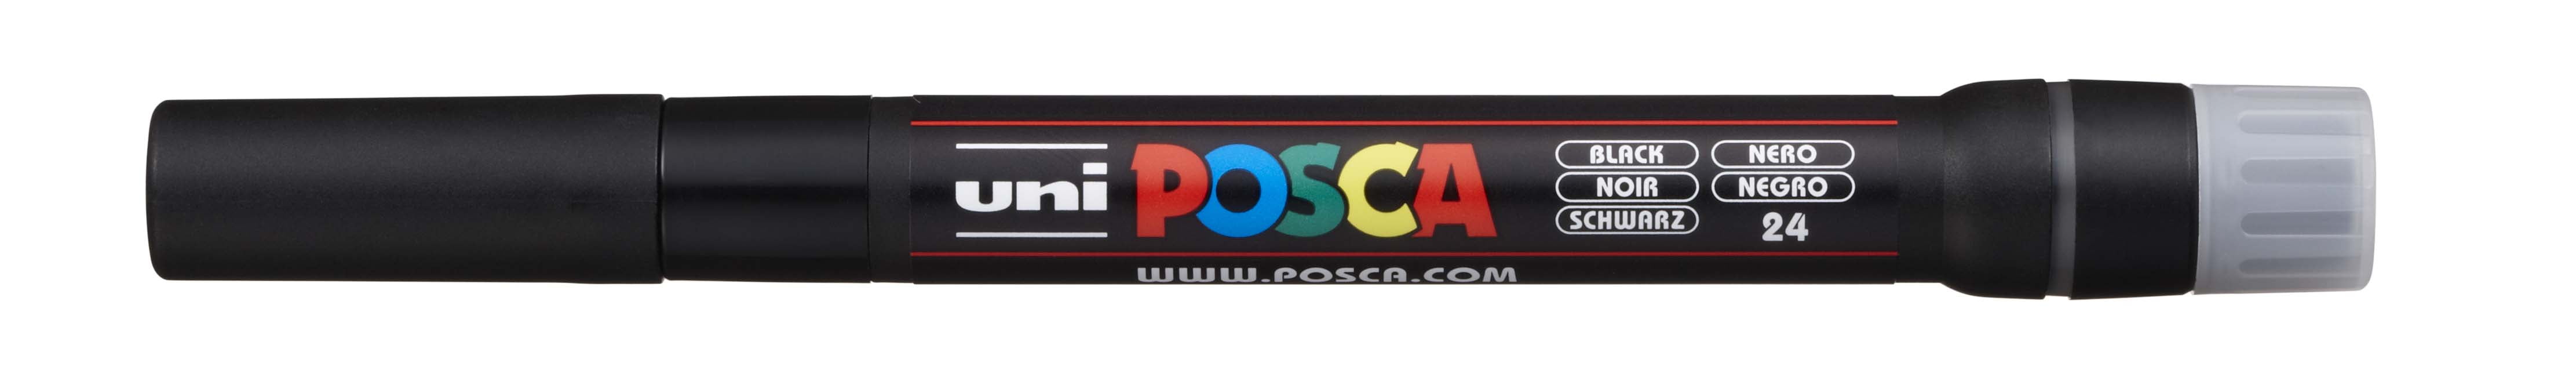 PCF-350 CANETA POSCA PRETO